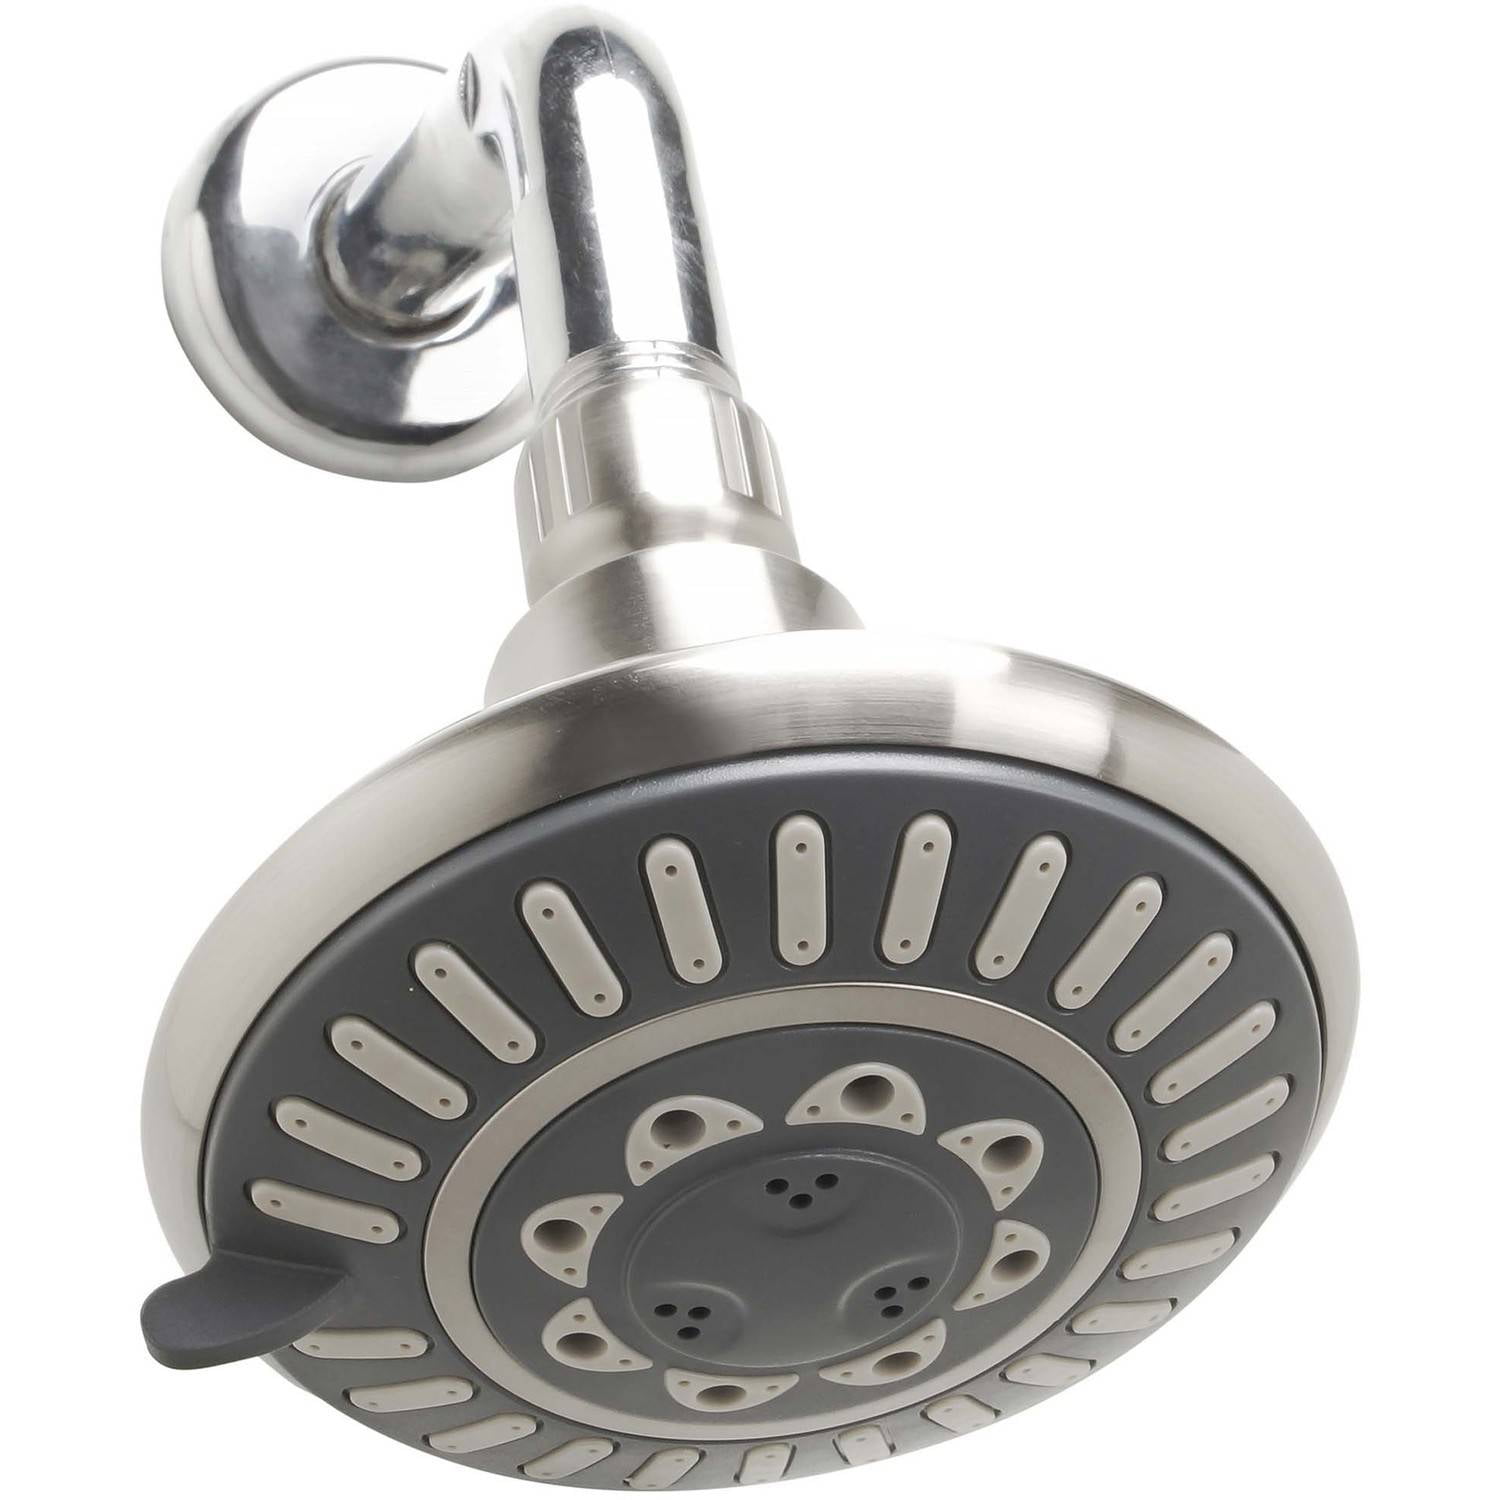 Evolve Showerheads 1 Spray 1.5 GPM Hand Shower With Ladybug ShowerStart TSV for sale online 